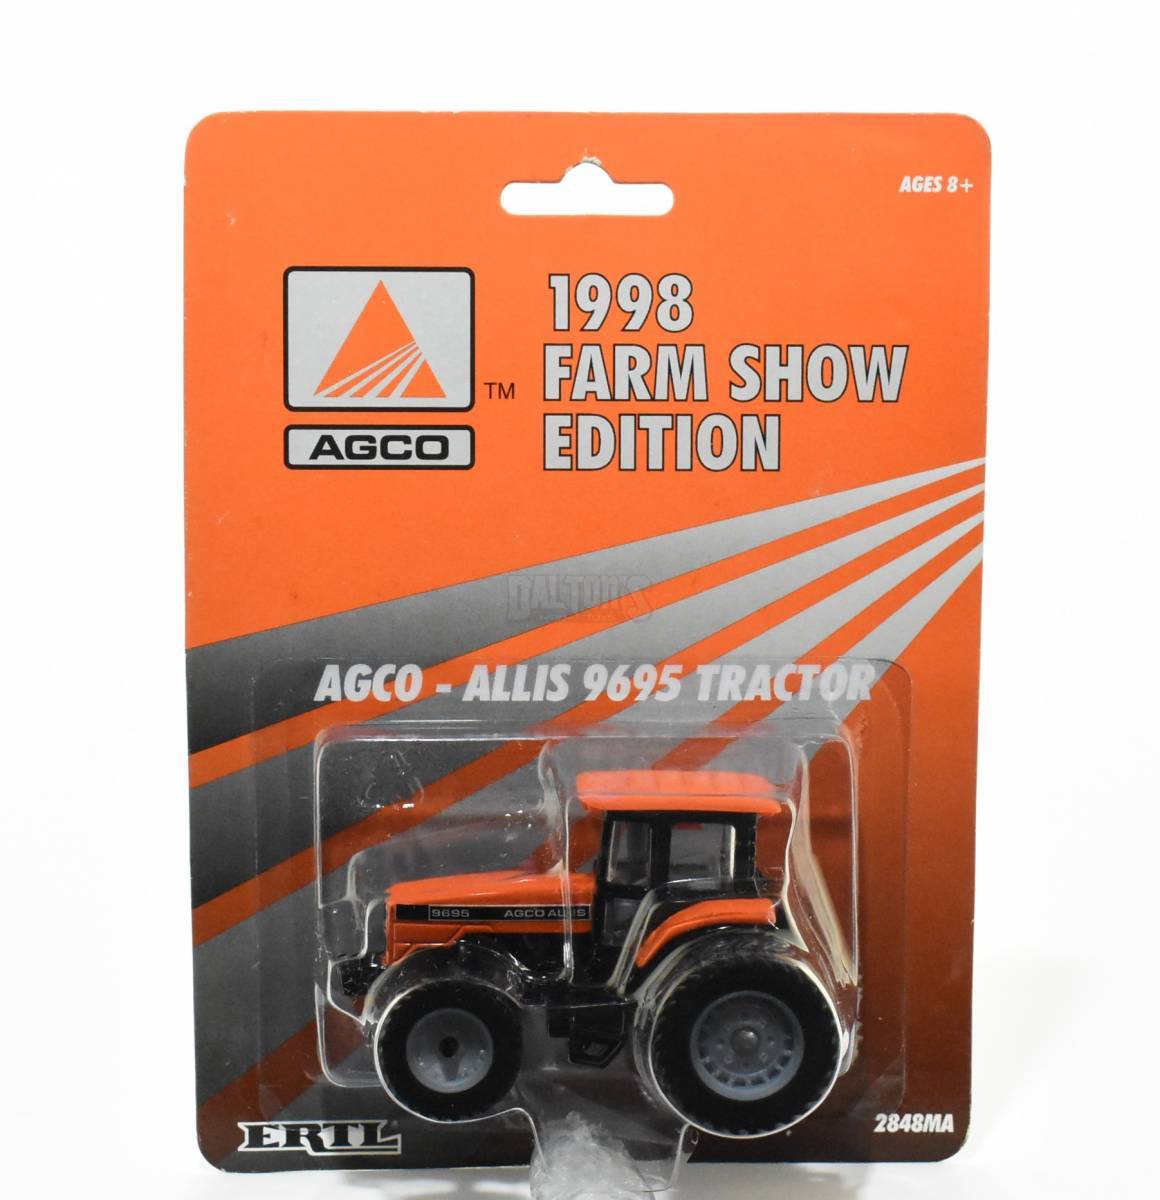 1/64 standi orange agco allis chalmers snowblower hitch Thrower ertl farm toy 